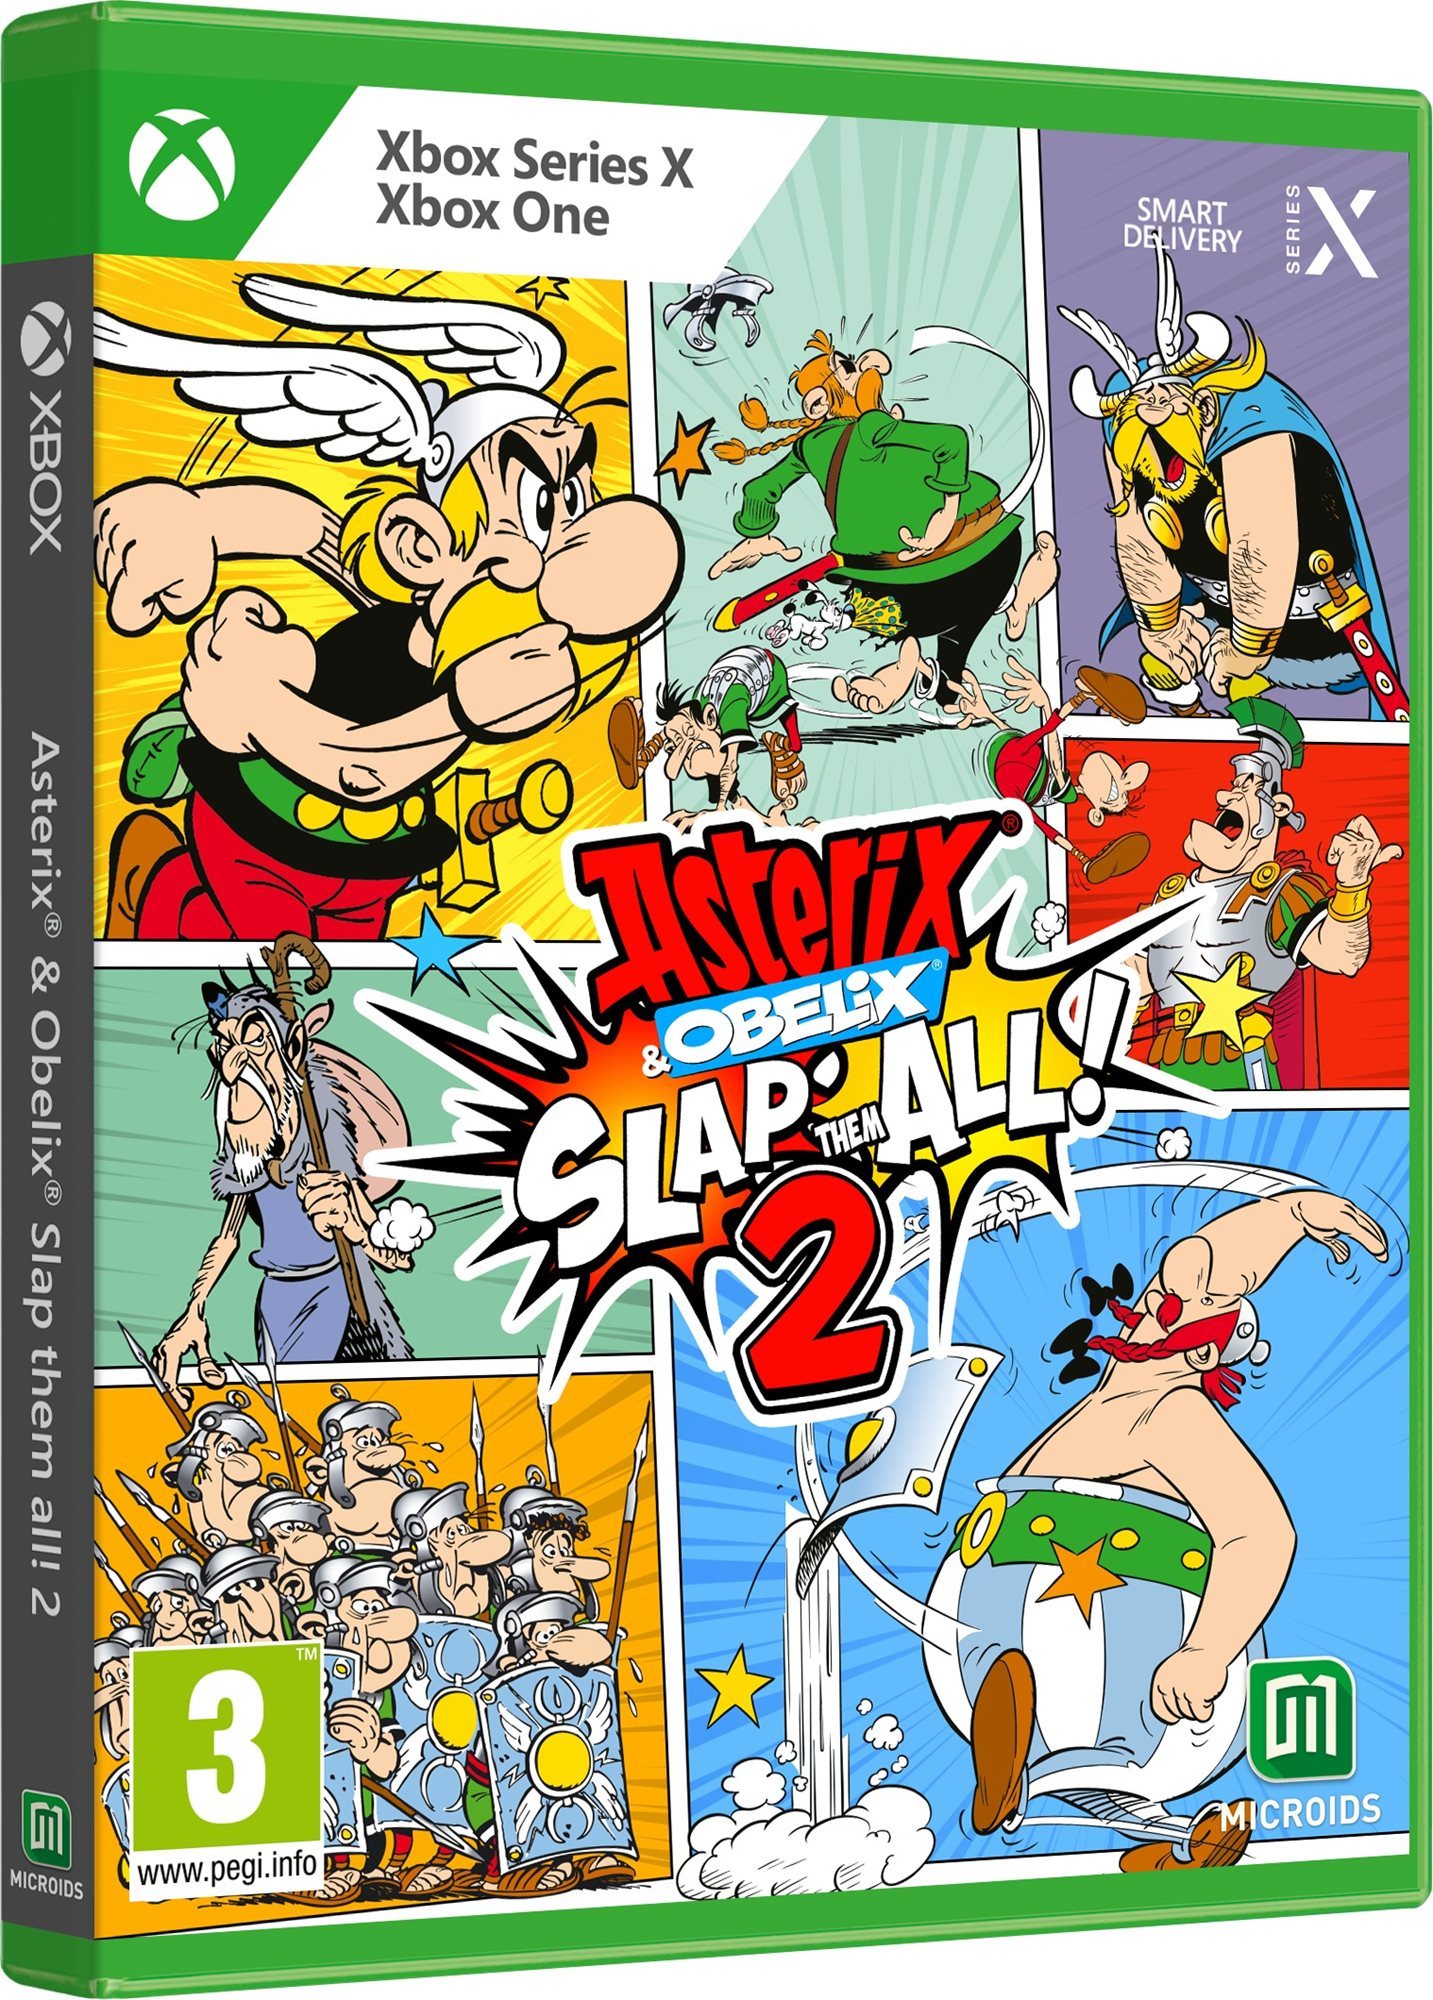 Asterix and Obelix: Slap Them All! 2 - Xbox